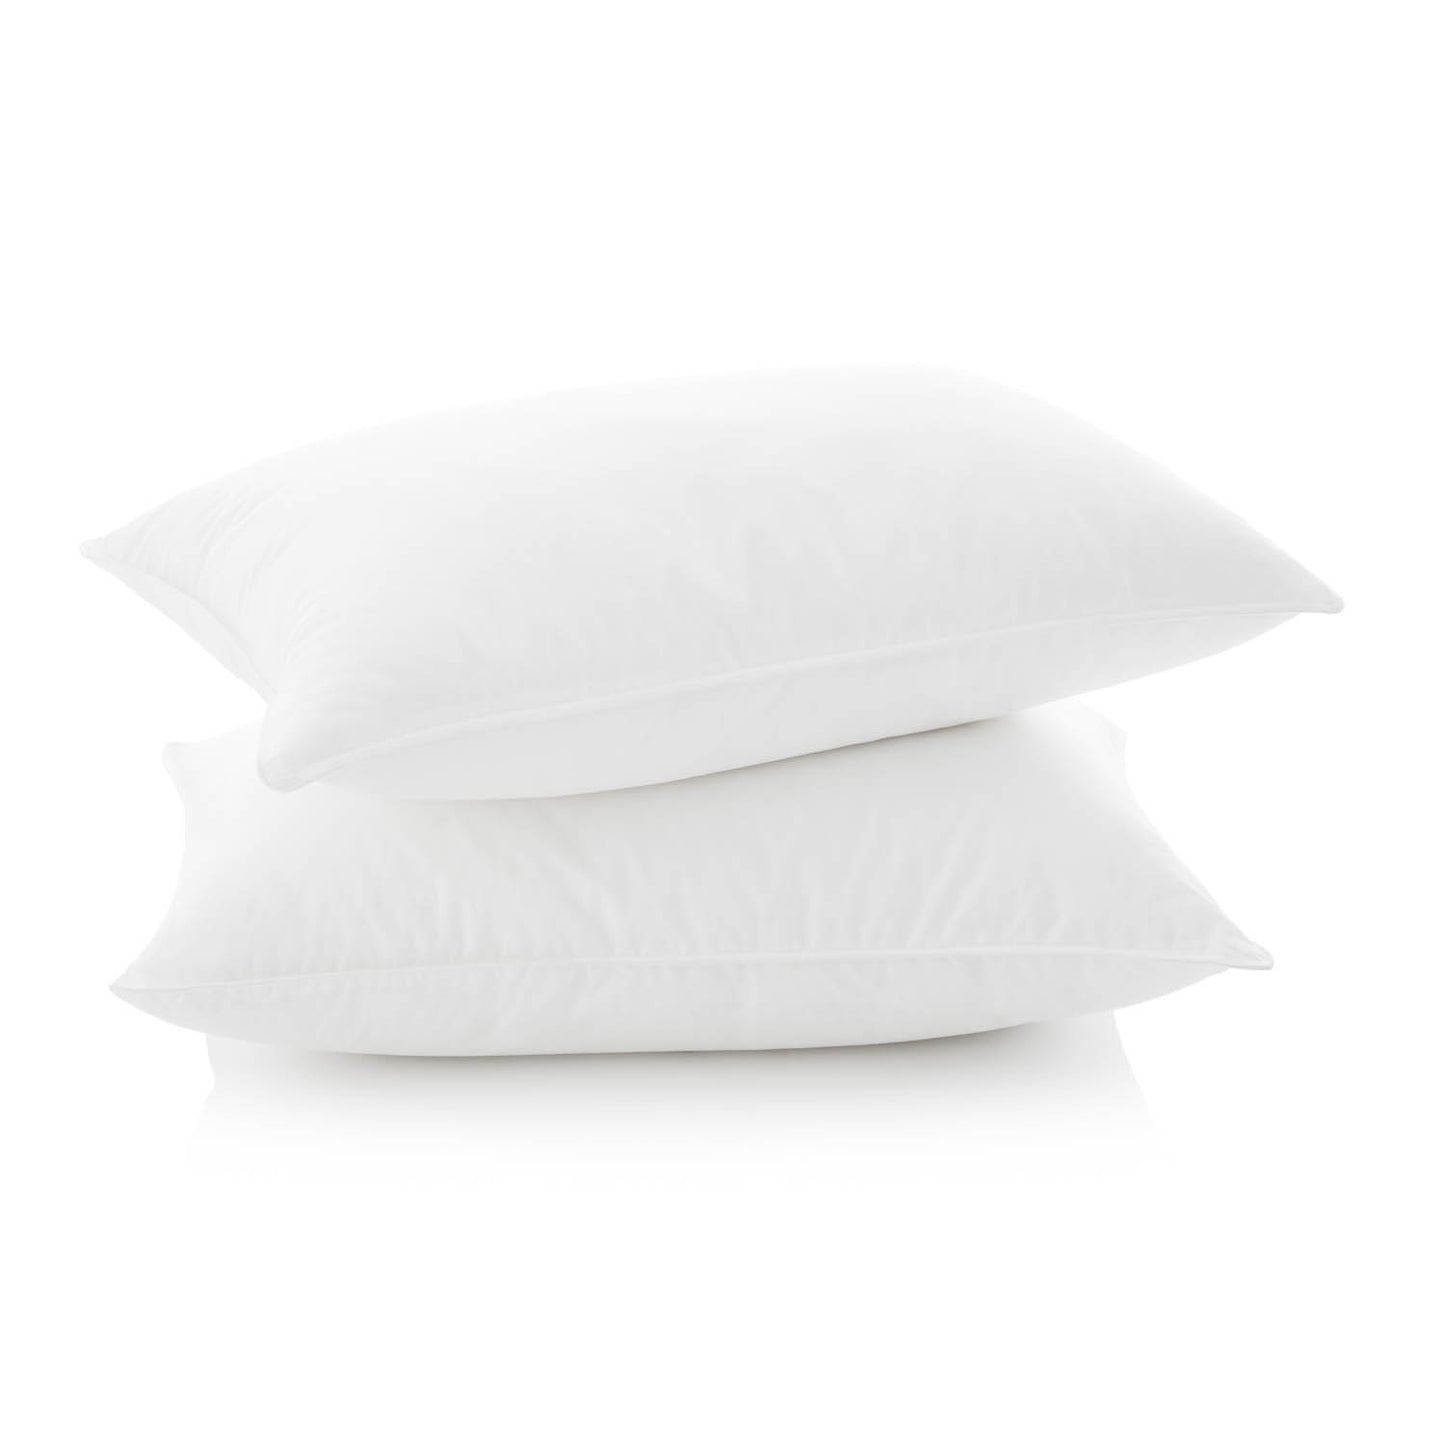 Weekender Compressed Pillow, 2-Pack, Standard